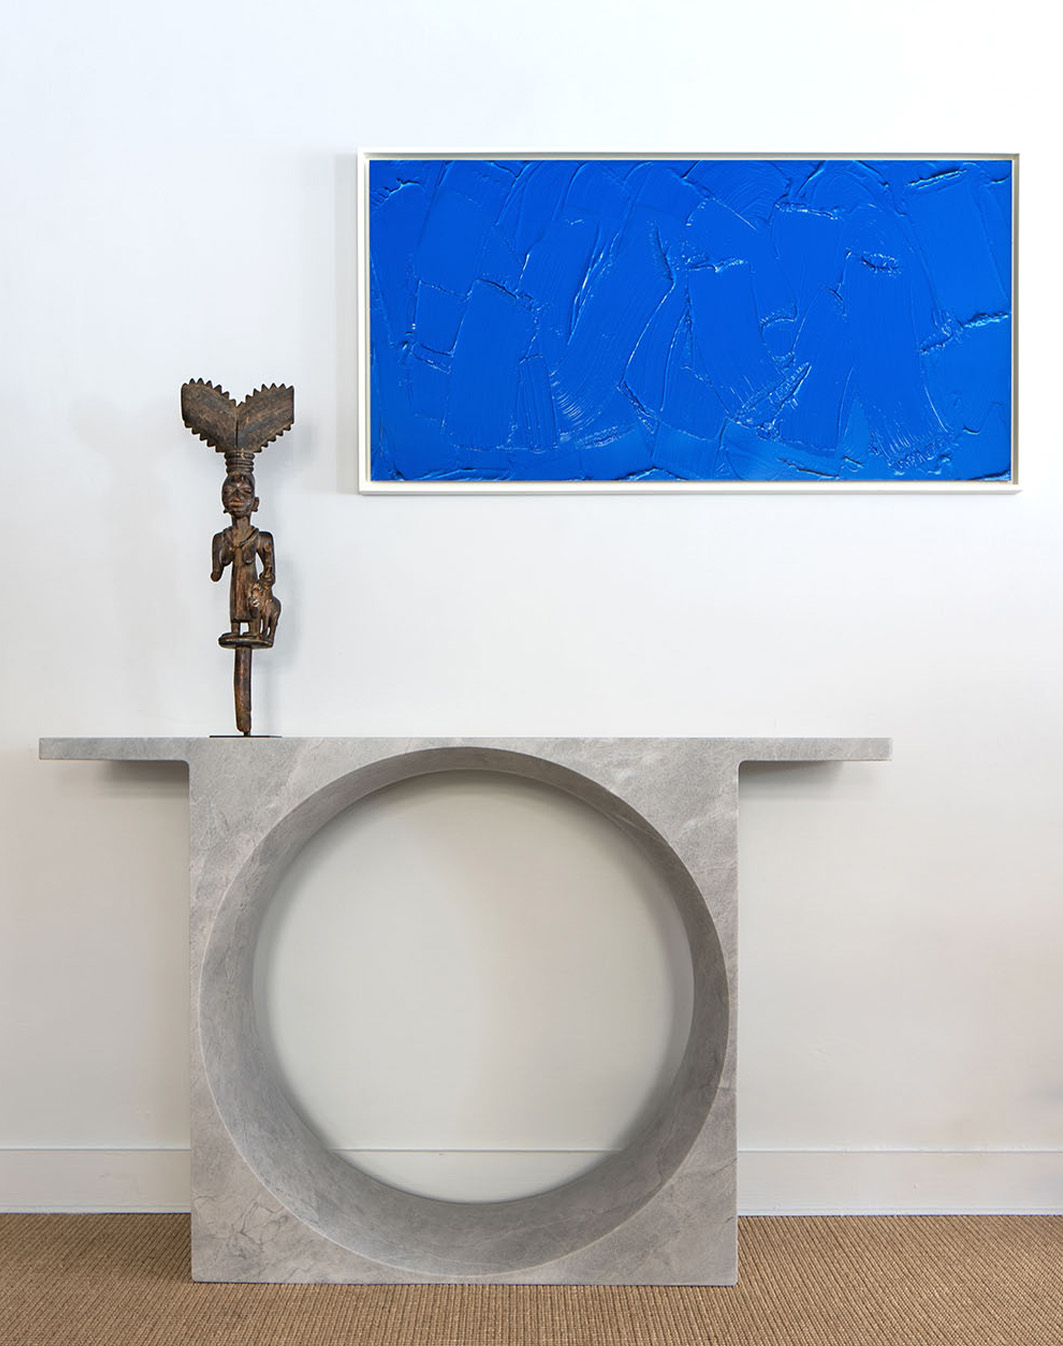 Konstantin Grcic - Lucas Ratton x kamel mennour x Galerie kreo @Saint-Tropez